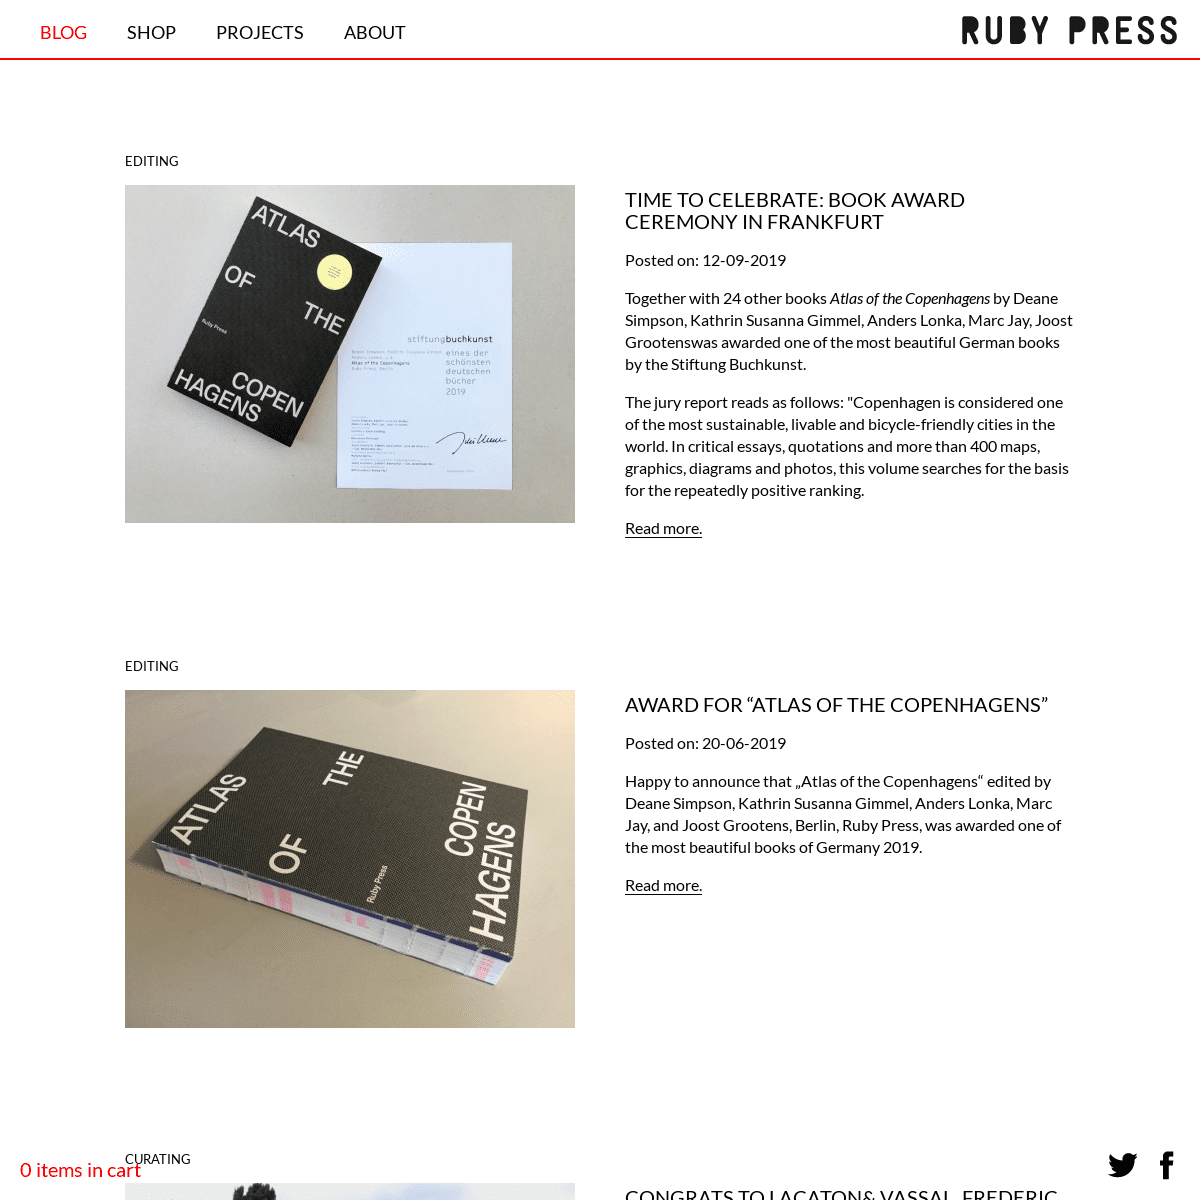  Ruby Press